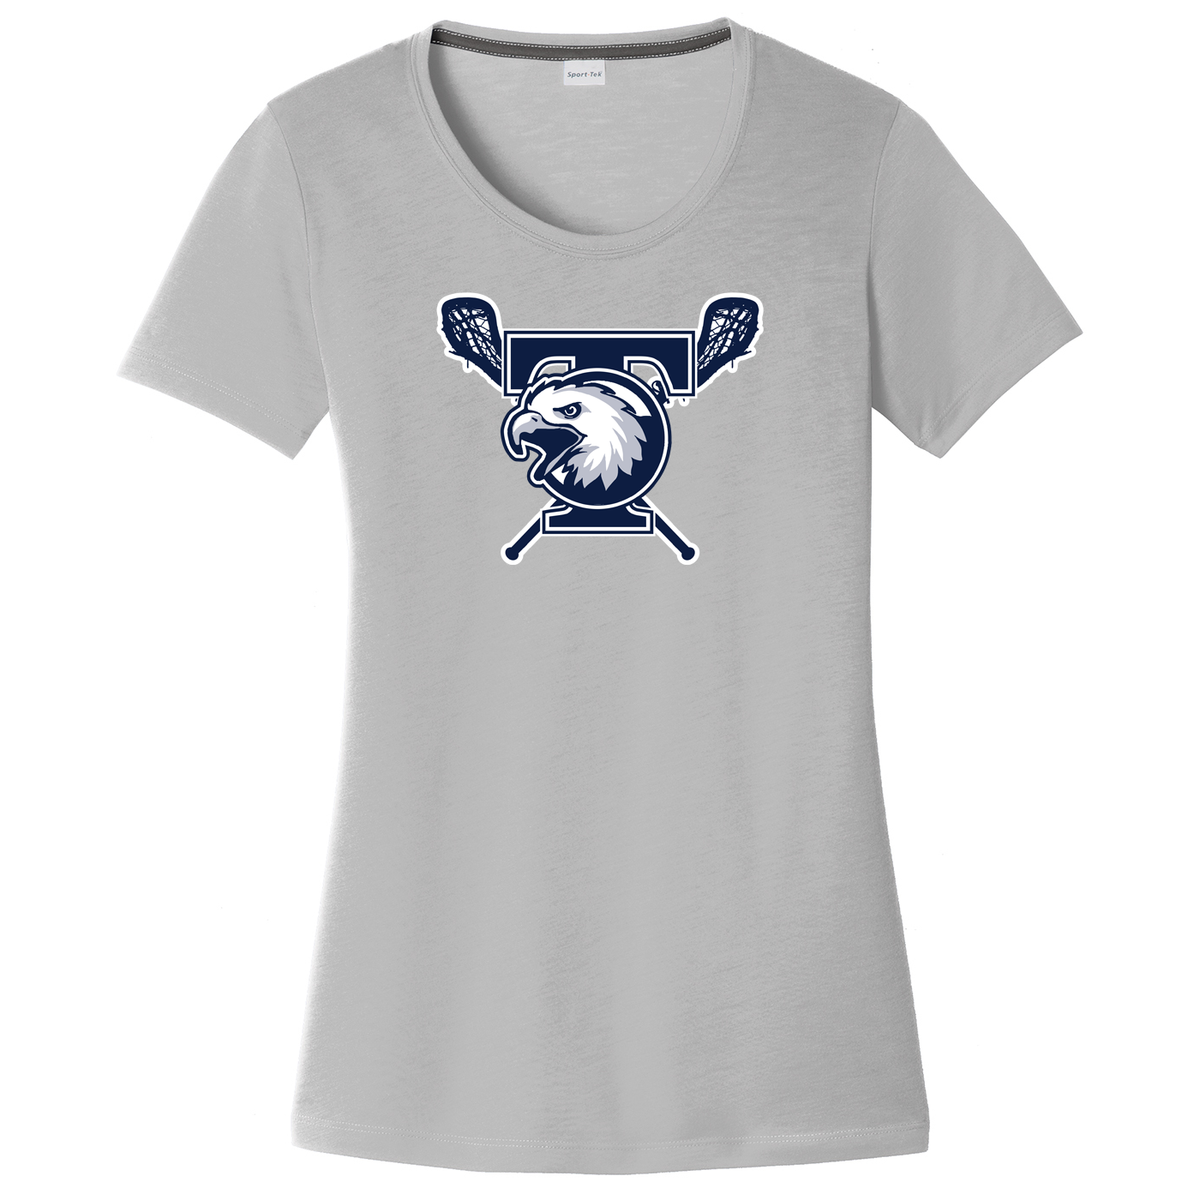 Tolland Lacrosse Club  Women's CottonTouch Performance T-Shirt